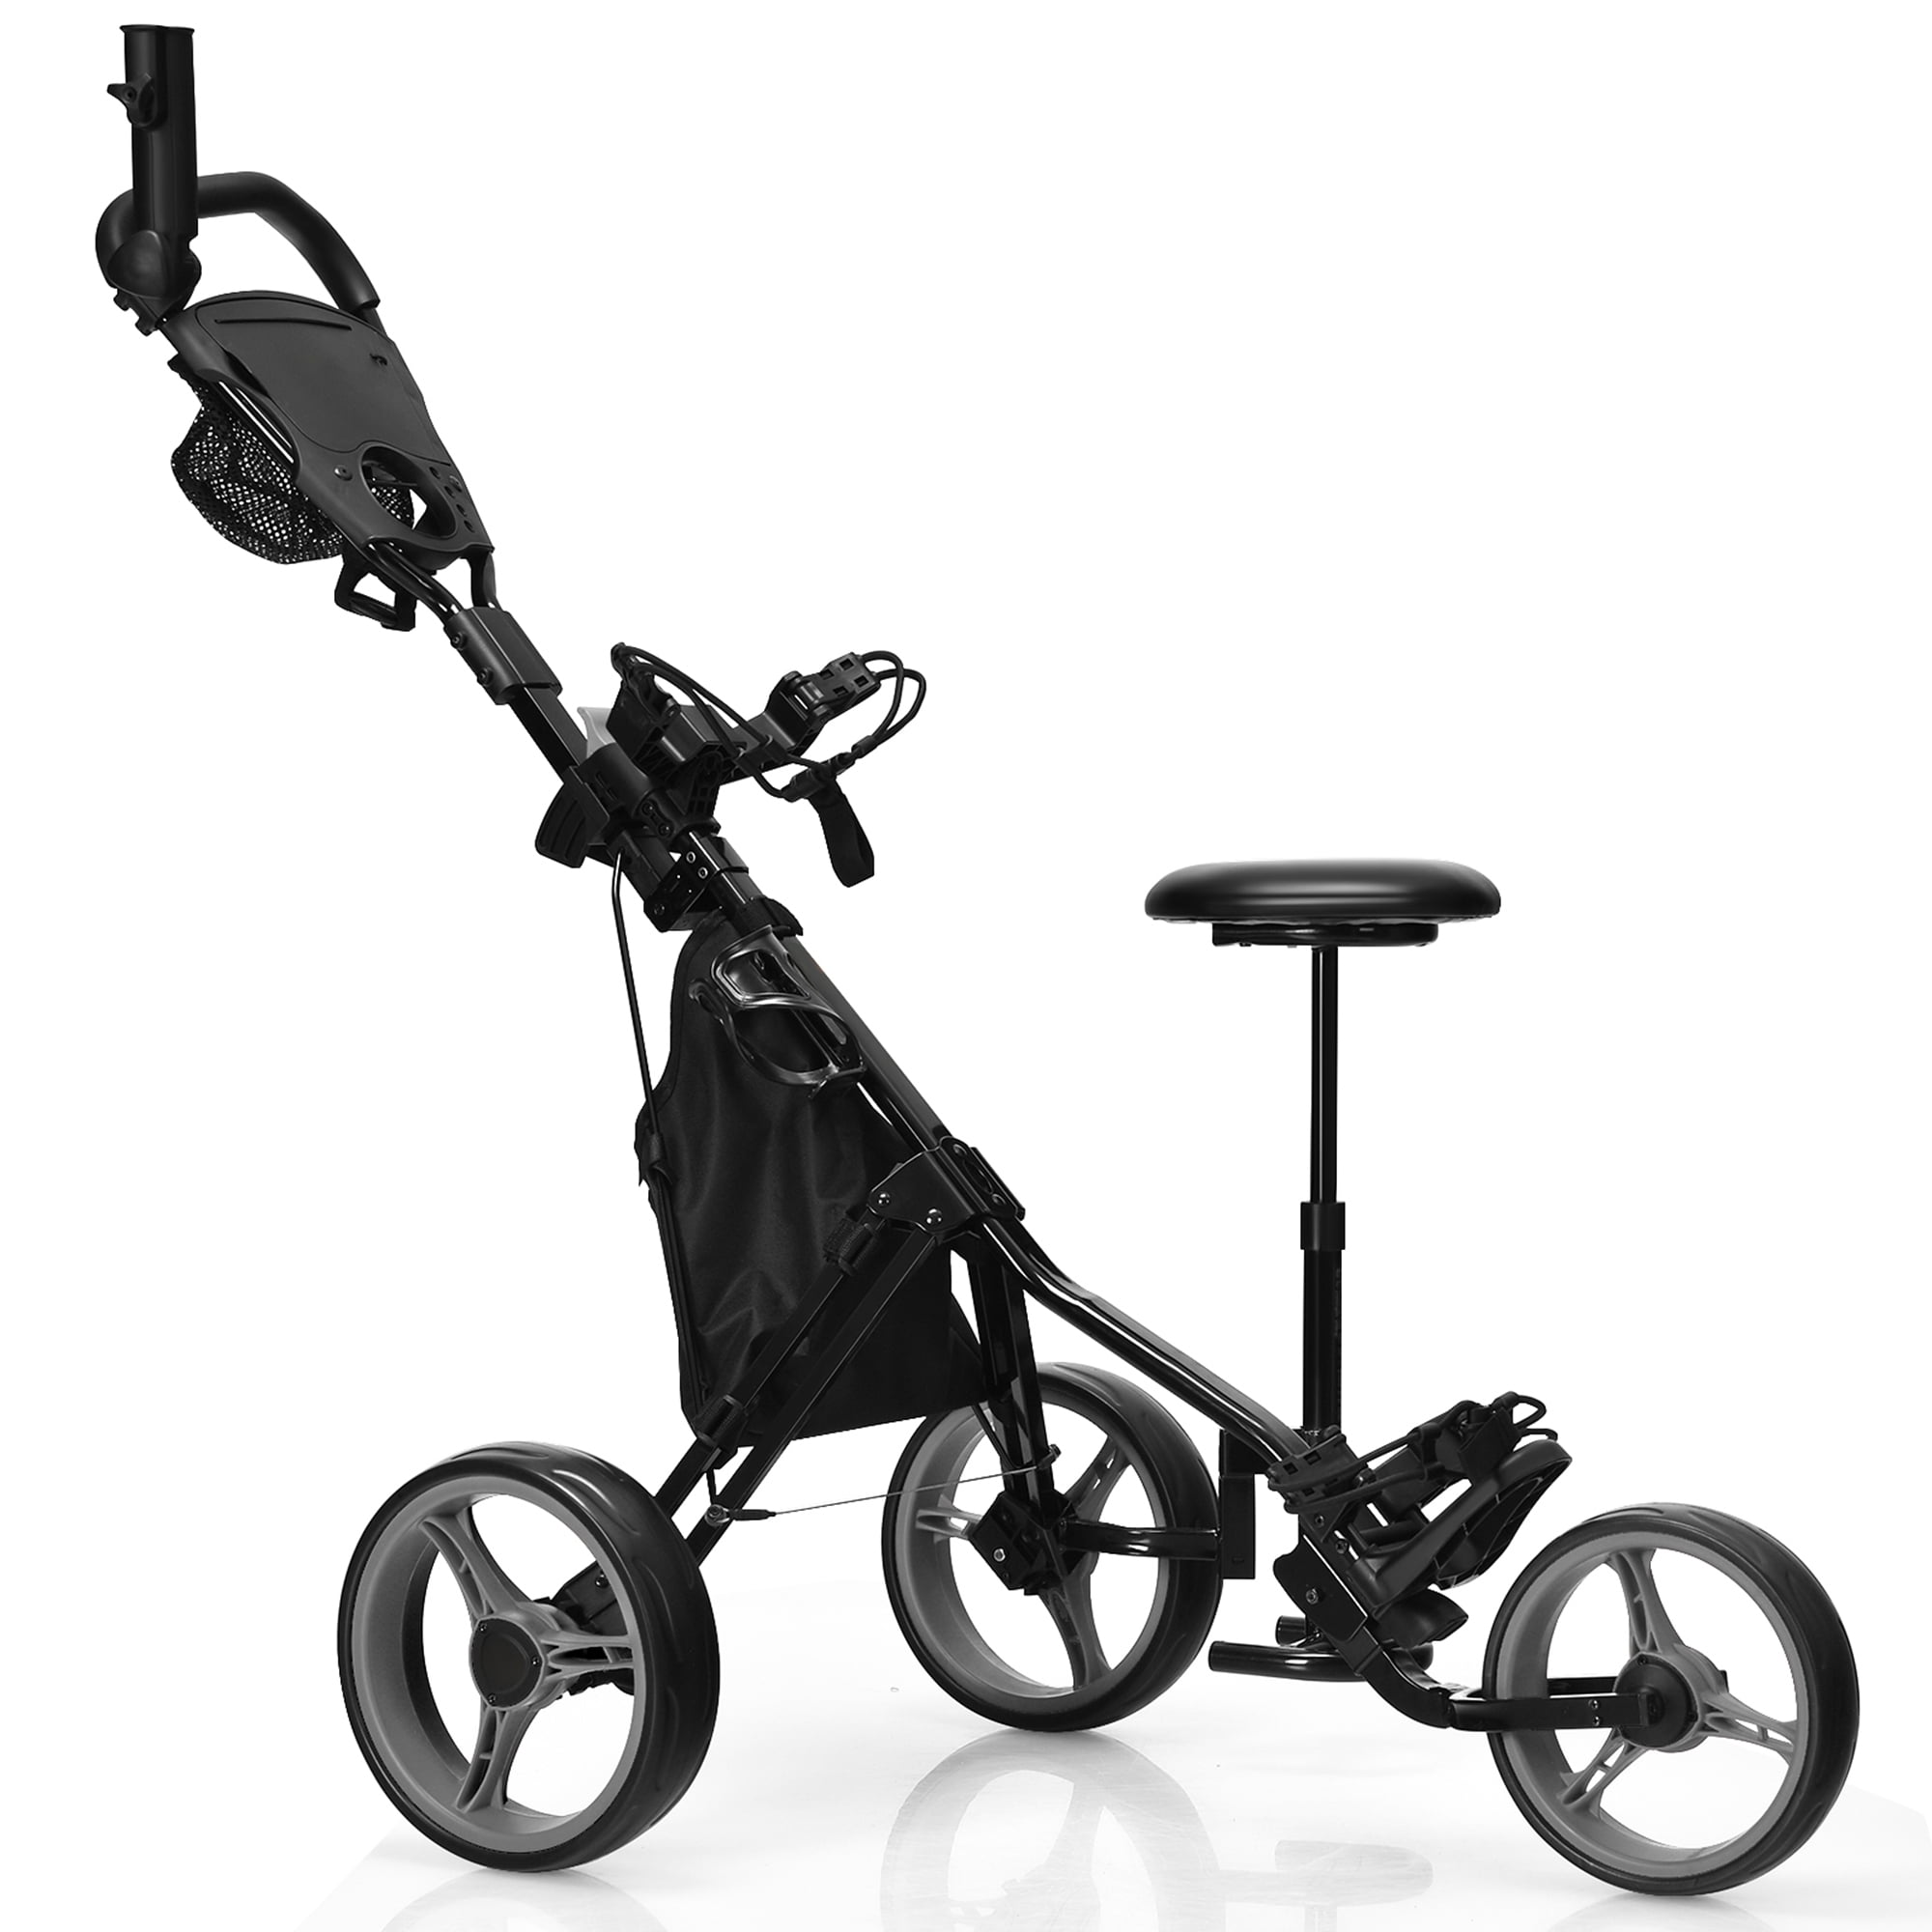 Caddymatic Golf X-TREME 3 Wheel Push/Pull Golf Cart with Seat Black/Red